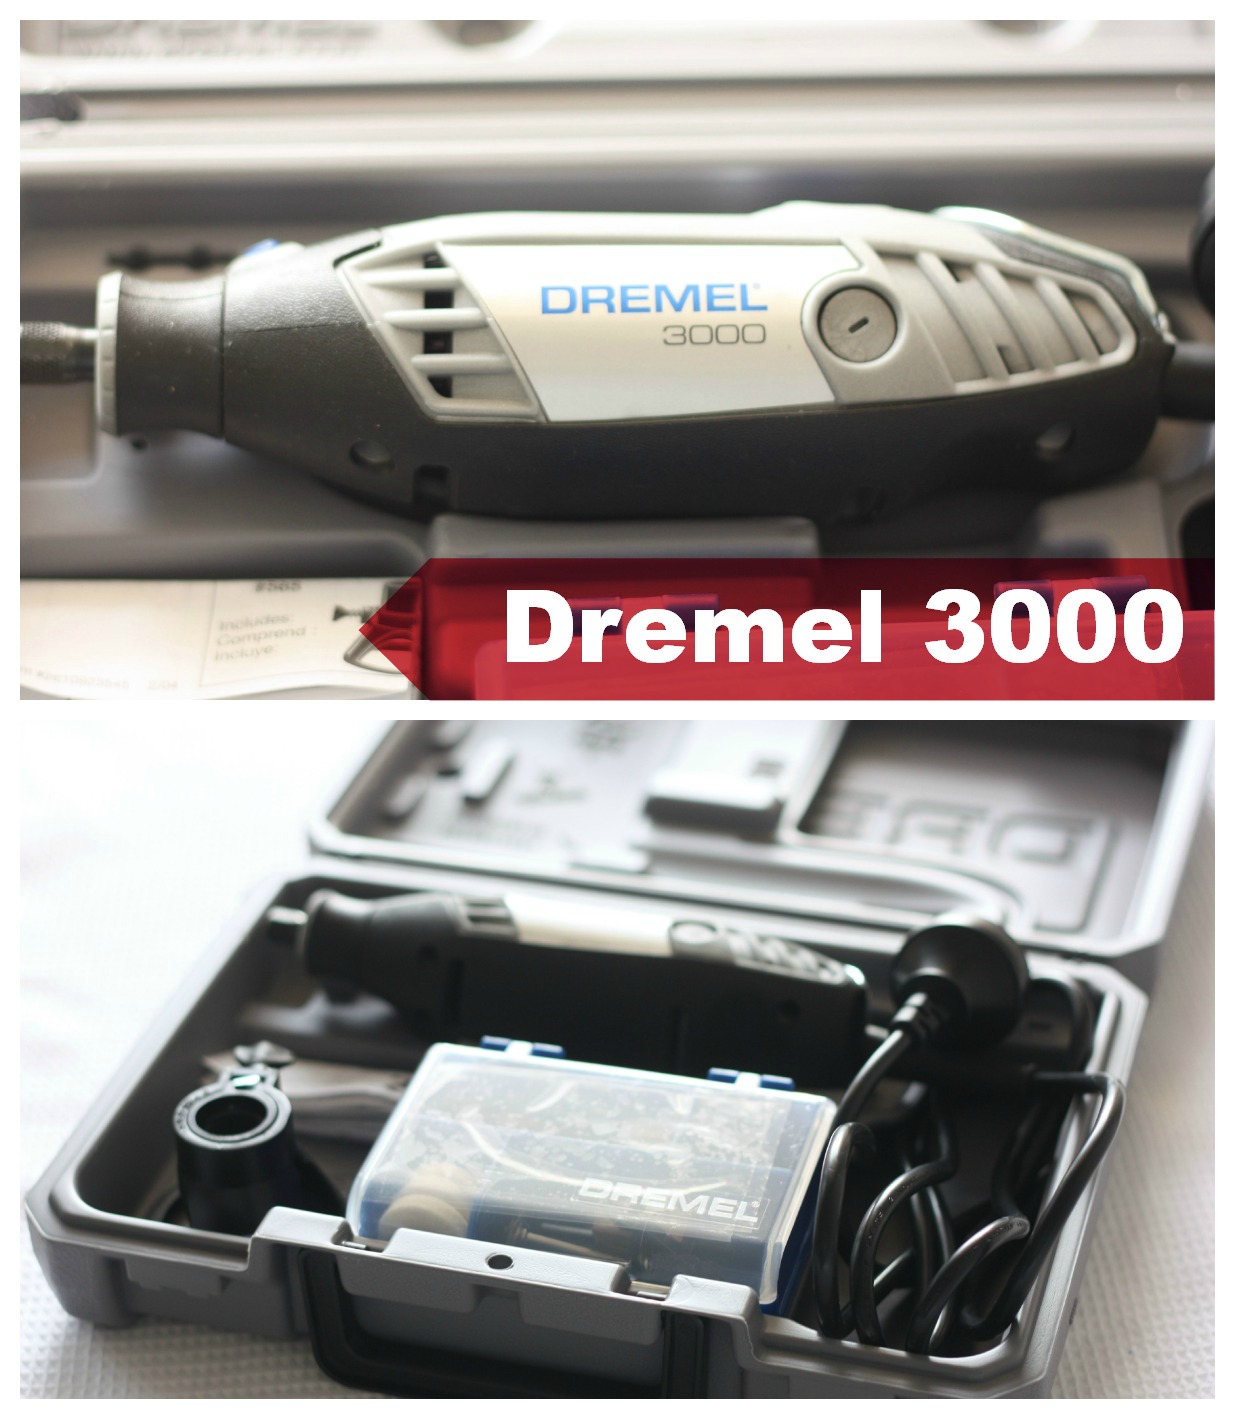 Dremel Attachments  Dremel multi tool, Dremel, Dremel tool projects